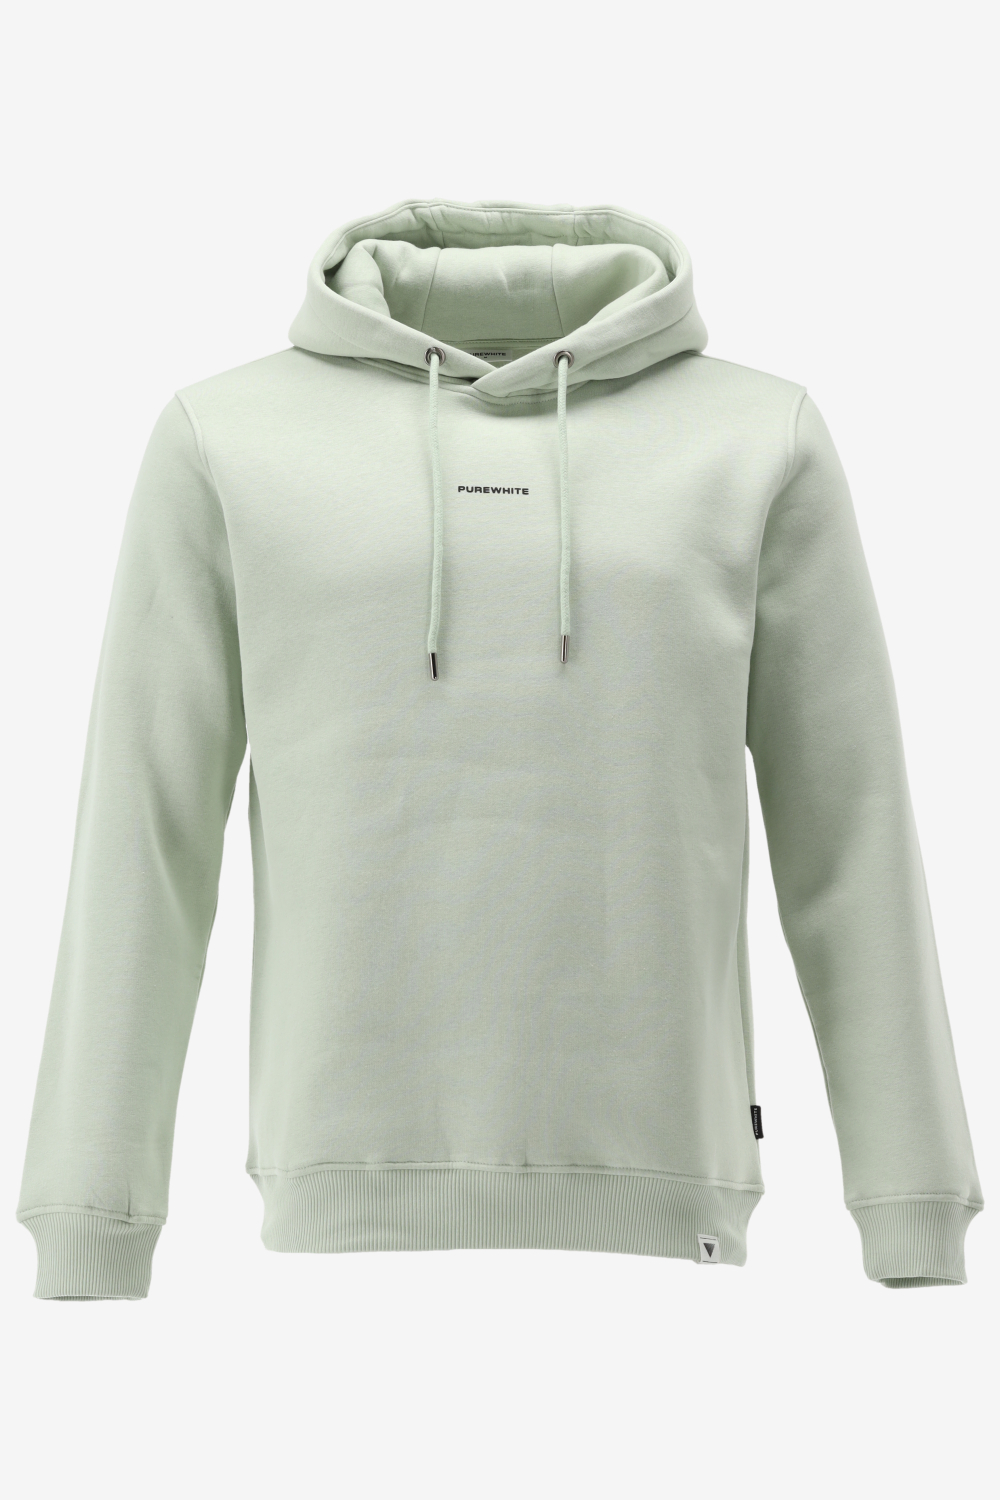 Purewhite -  Heren Regular Fit  Essential Hoodie  - Groen - Maat XS